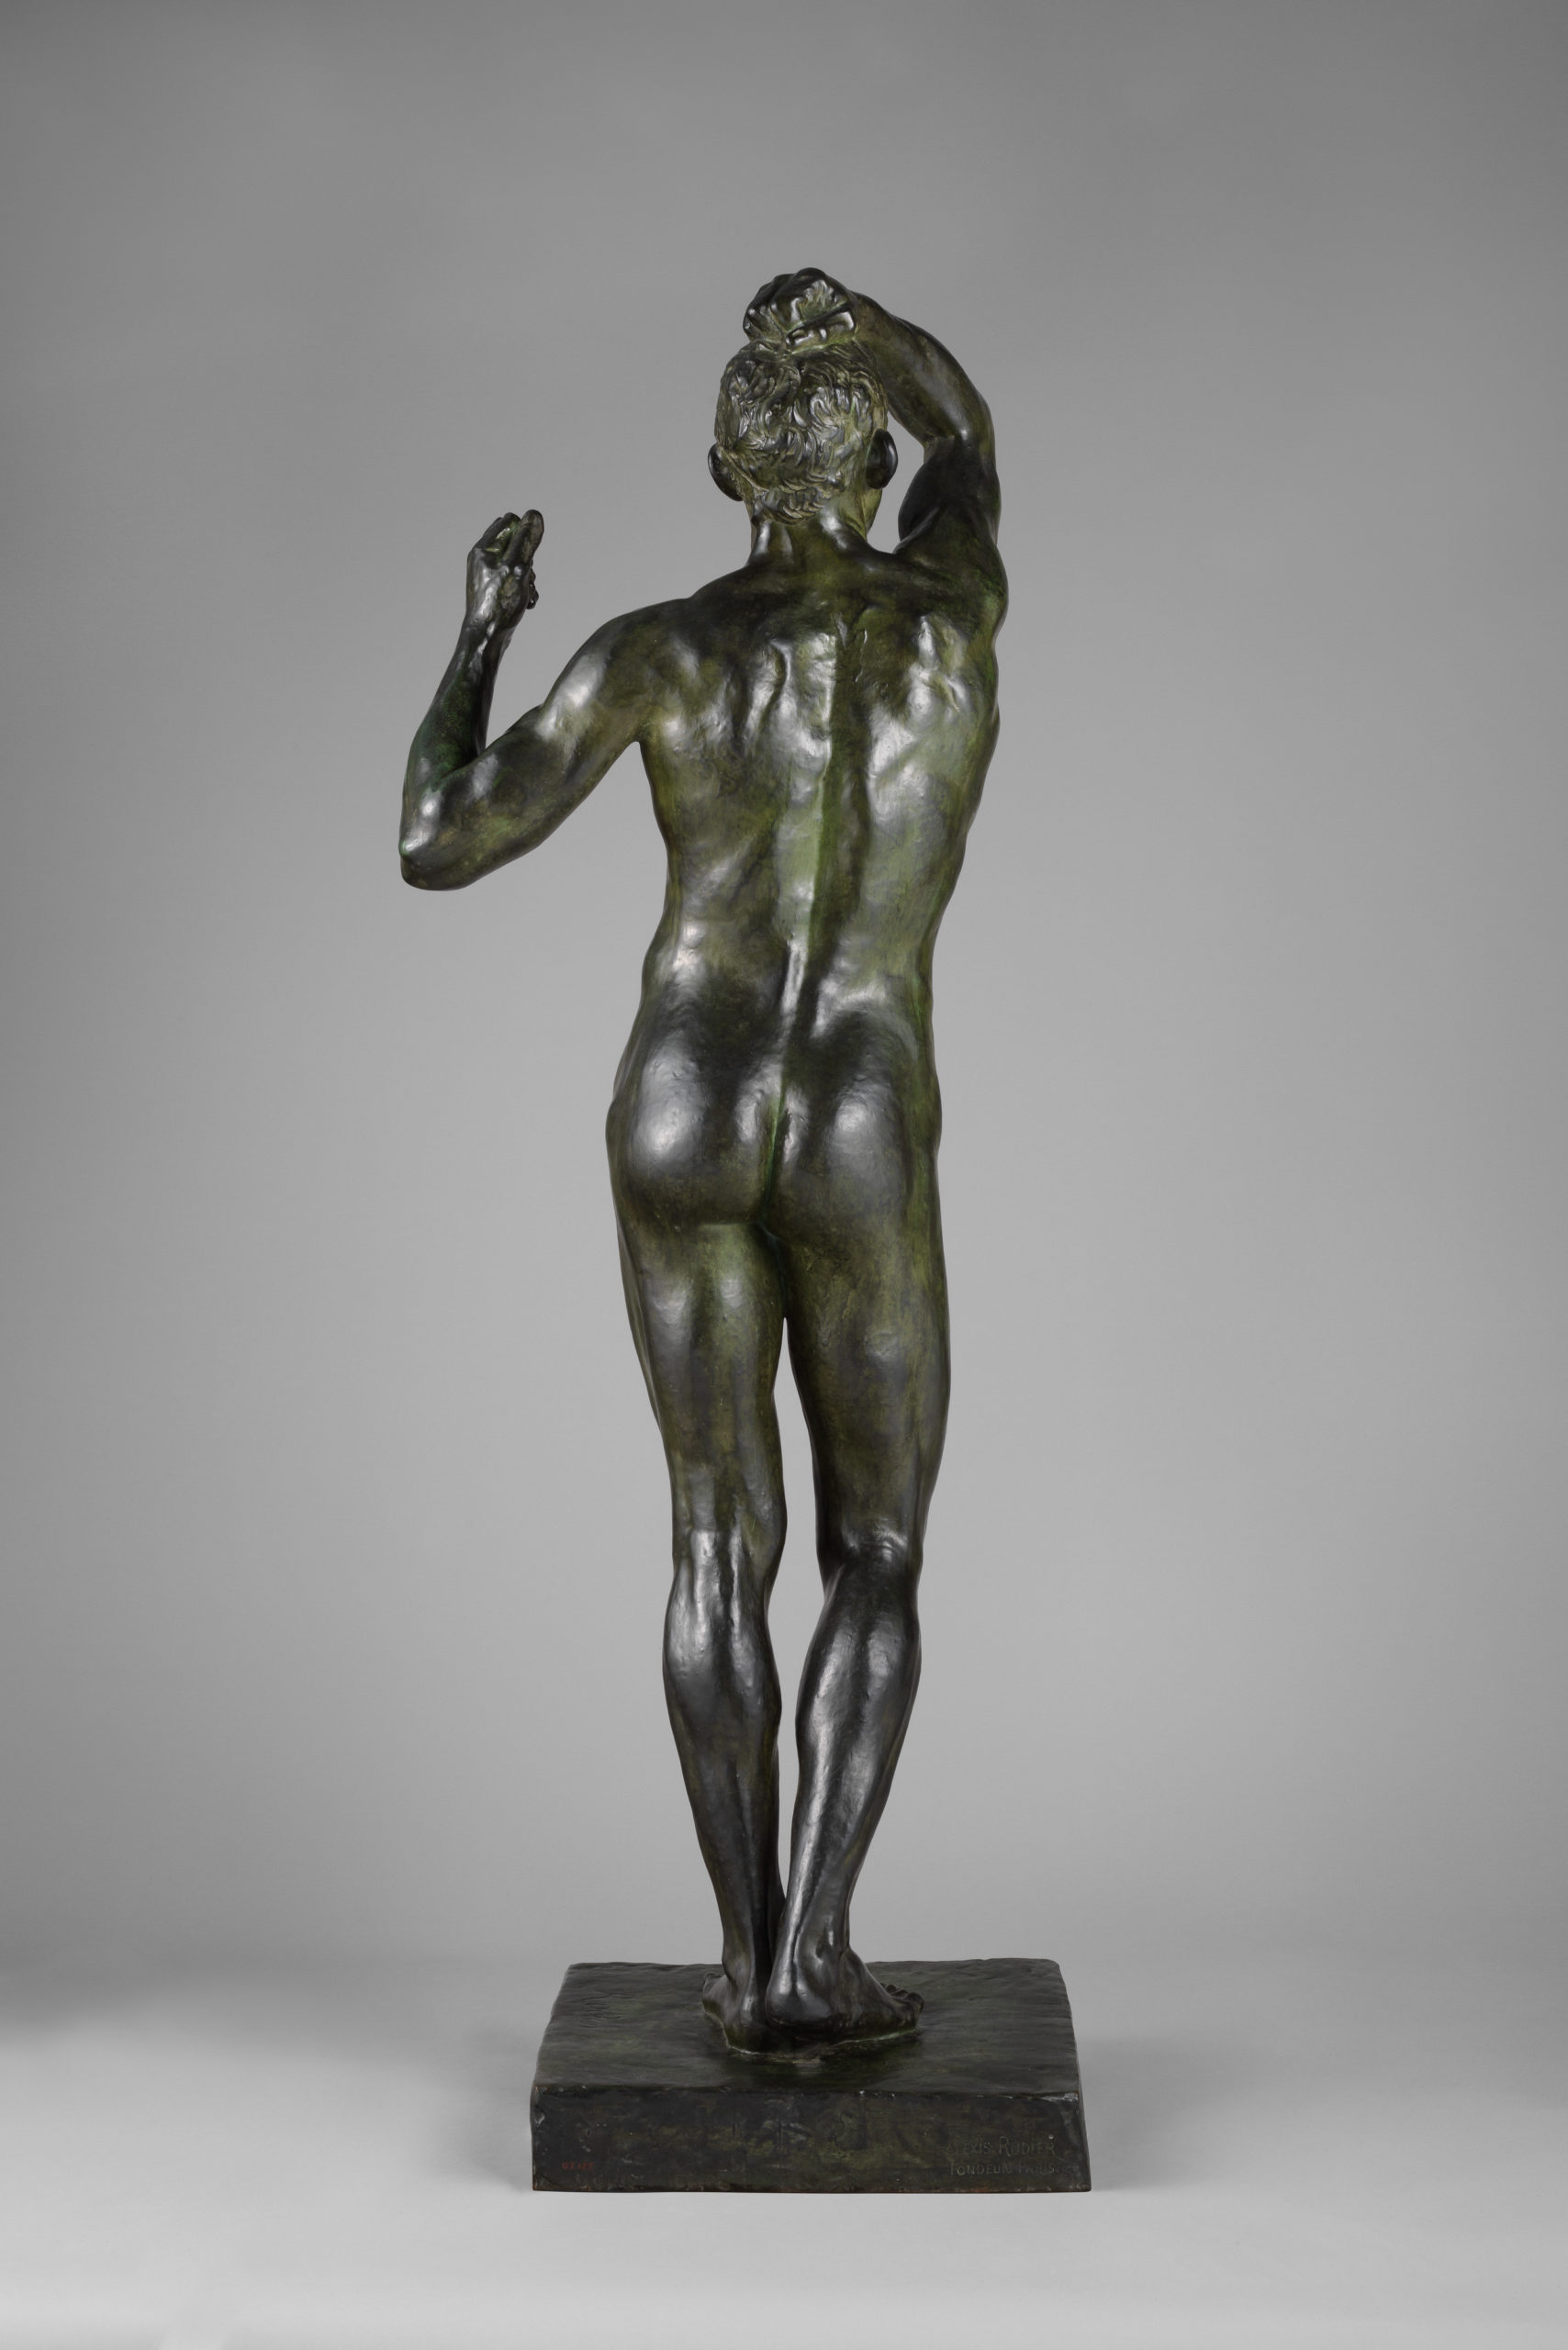 Auguste Rodin, The Age of Bronze (L’Age d’airain), modeled 1876, cast by Alexis Rudier c. 1906, bronze, 182.9 cm high (The Metropolitan Museum of Art)